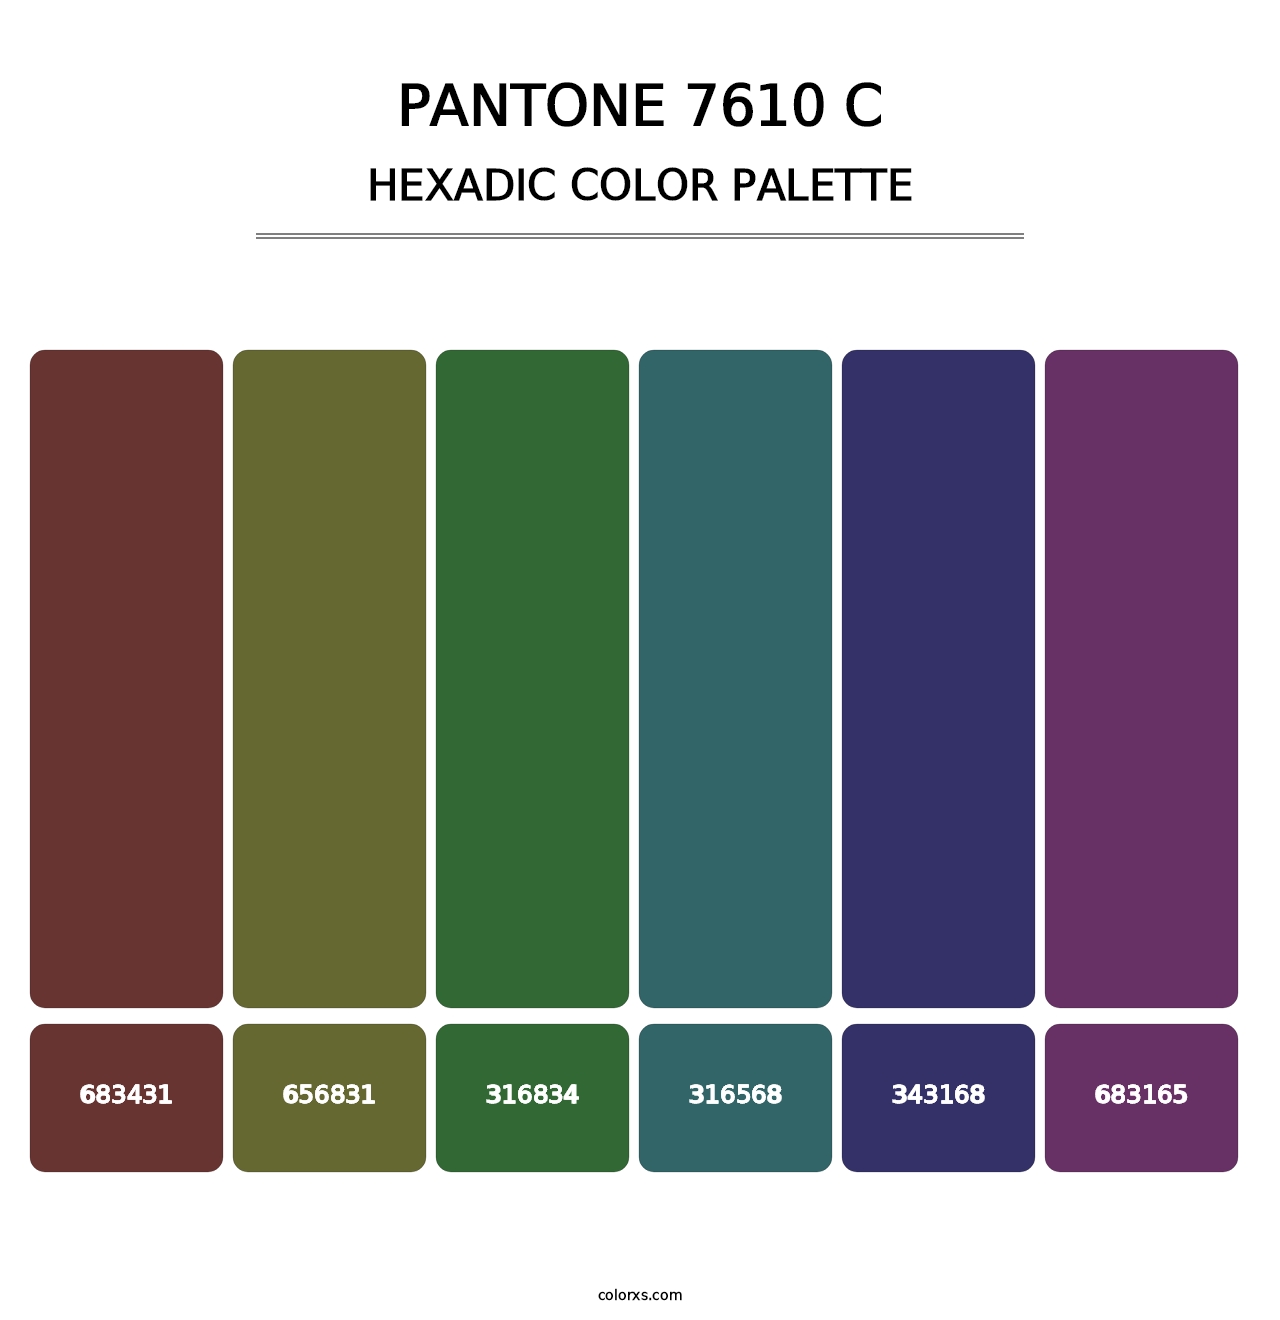 PANTONE 7610 C - Hexadic Color Palette